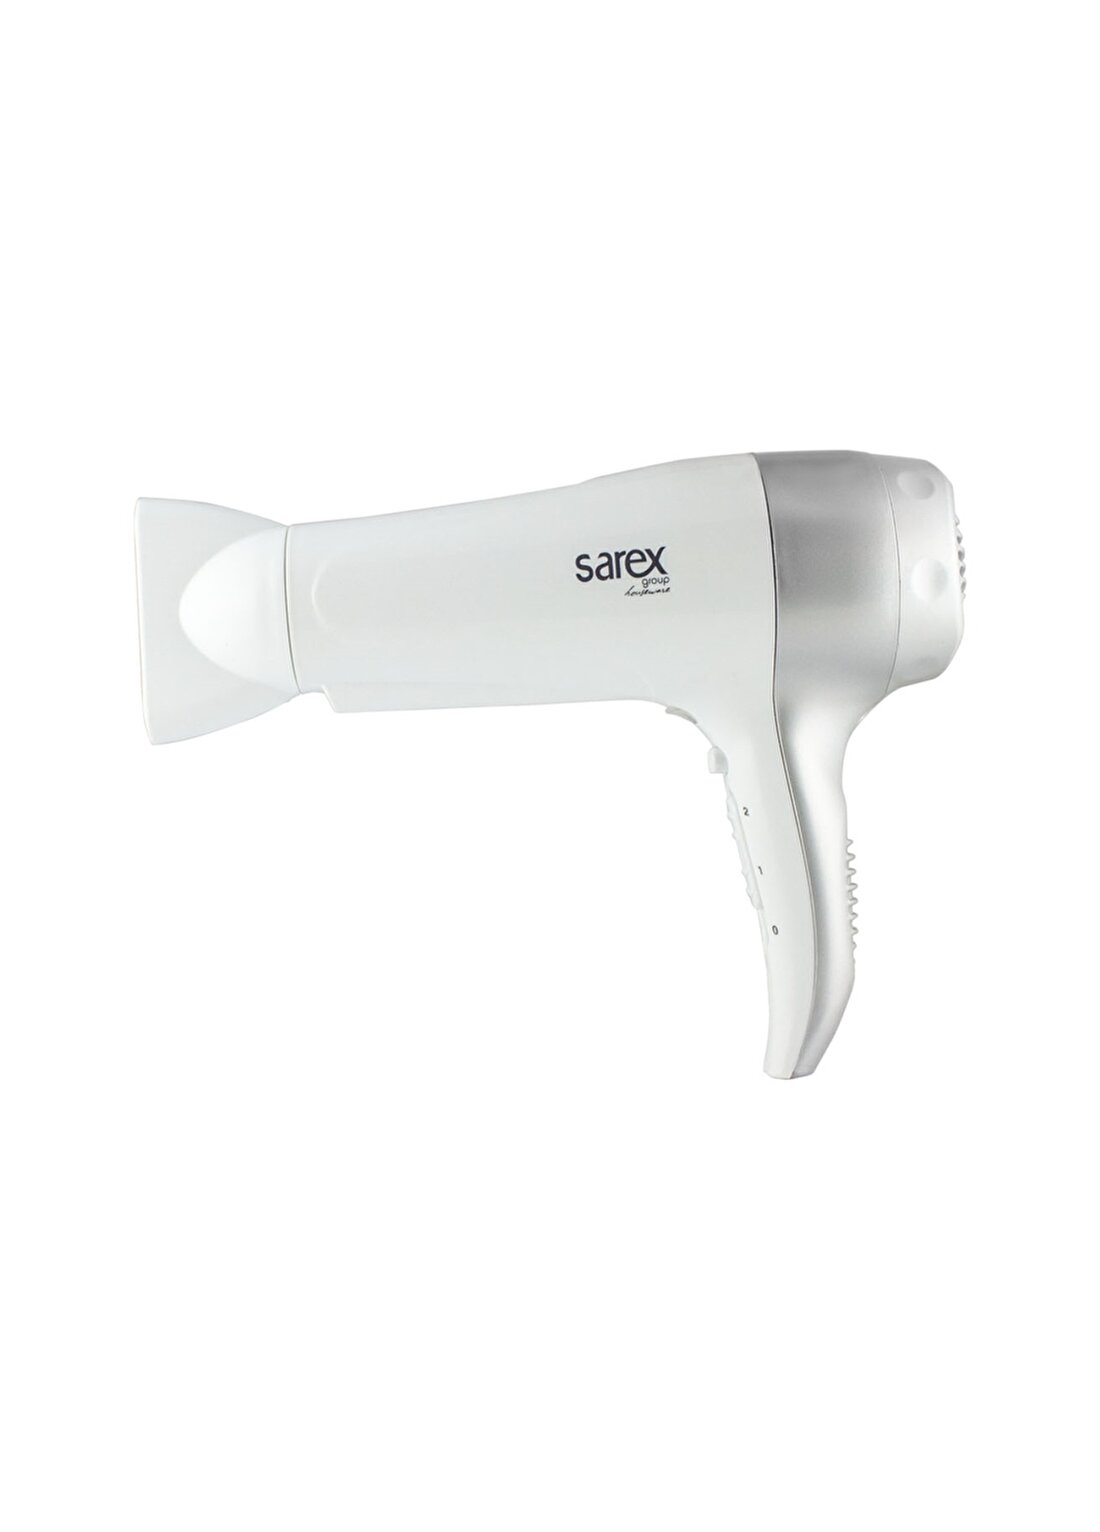 Sarex SR4110 Emily Beyaz Saç Kurutma Makinesi